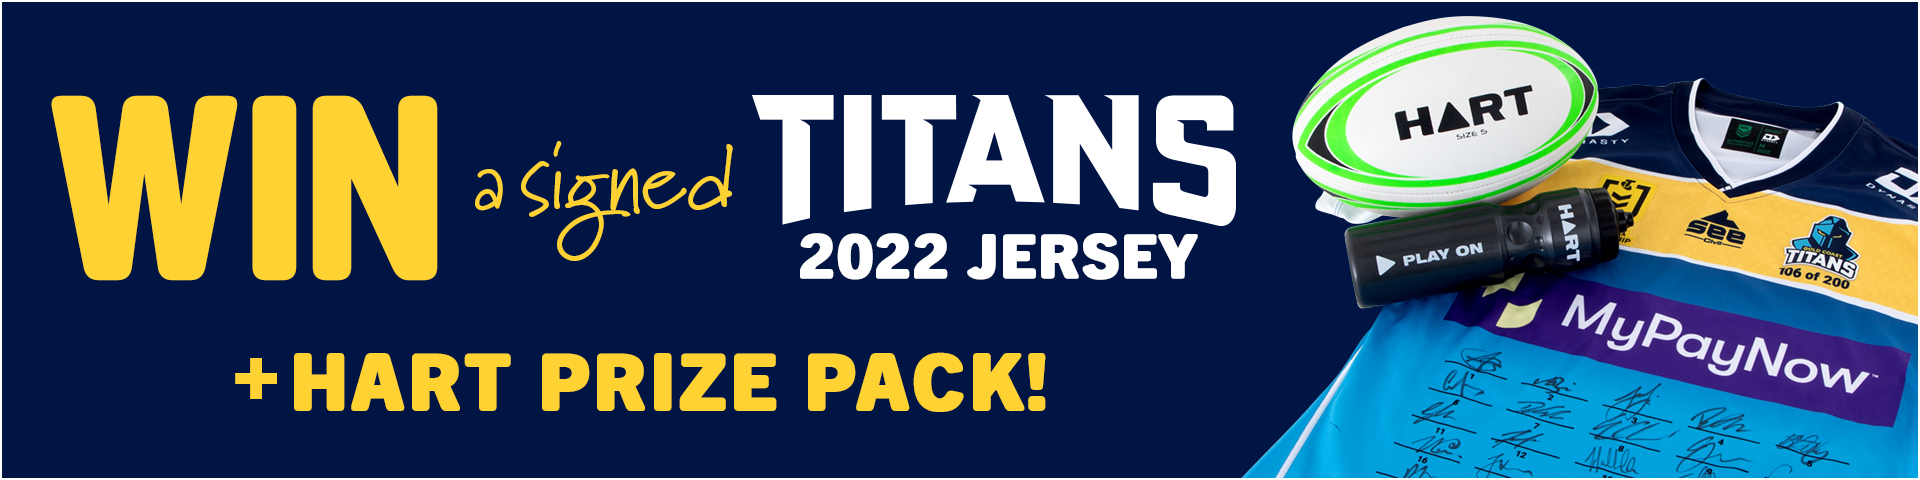 Titans Promotion Banner